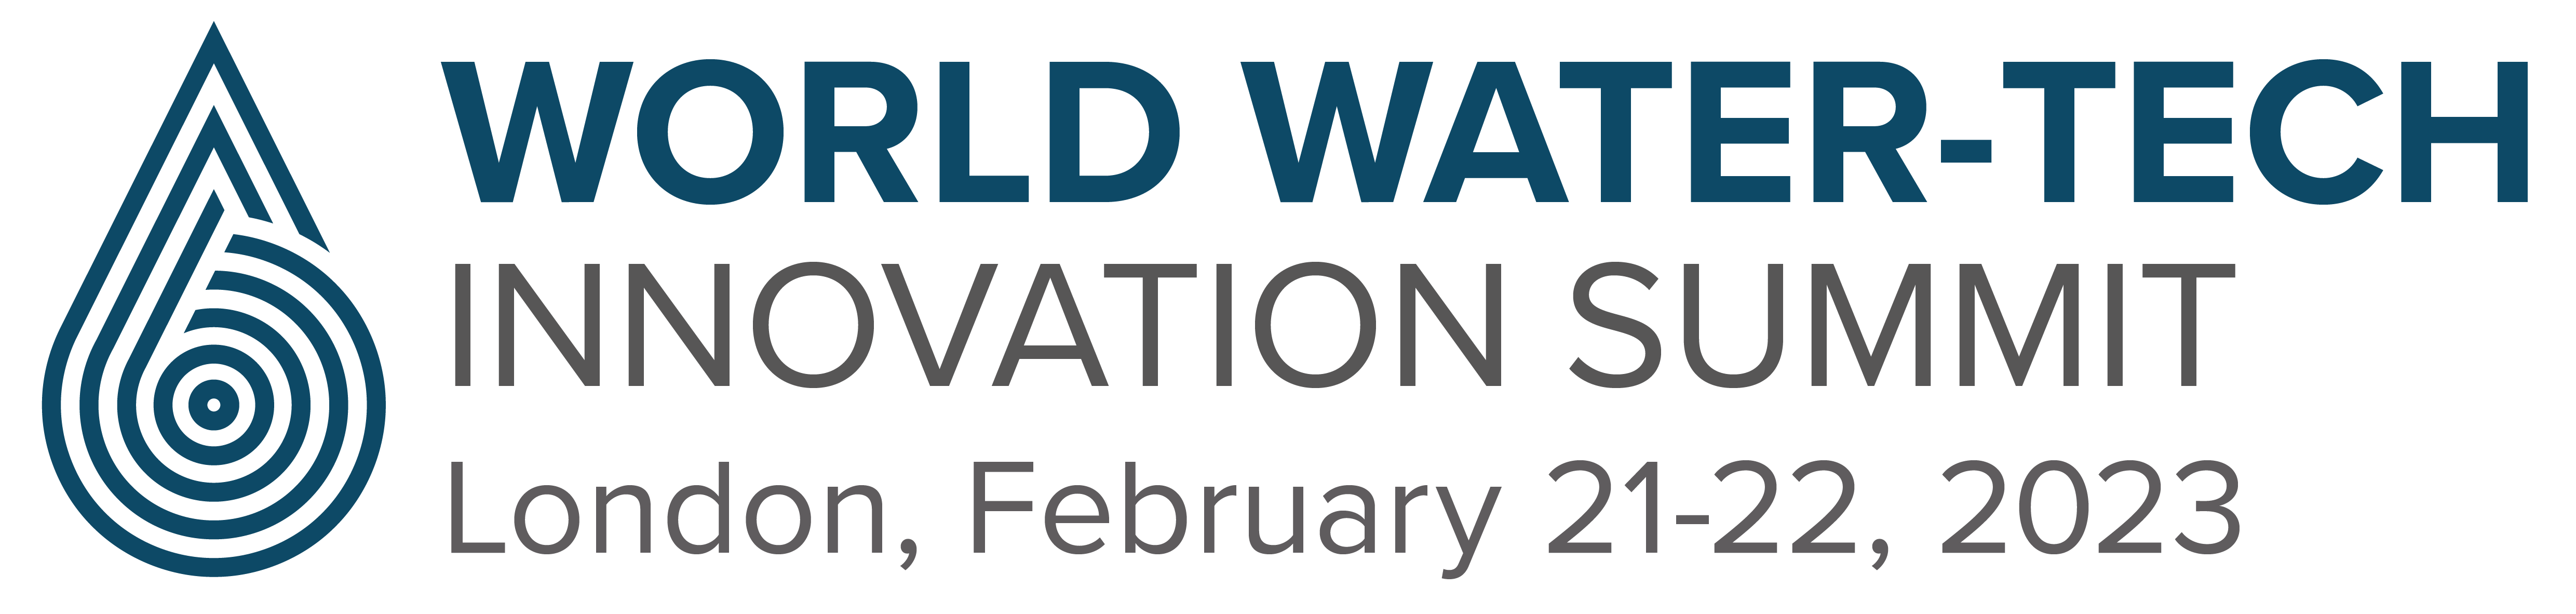 WORLD WATERTECH INNOVATION SUMMIT Water Magazine